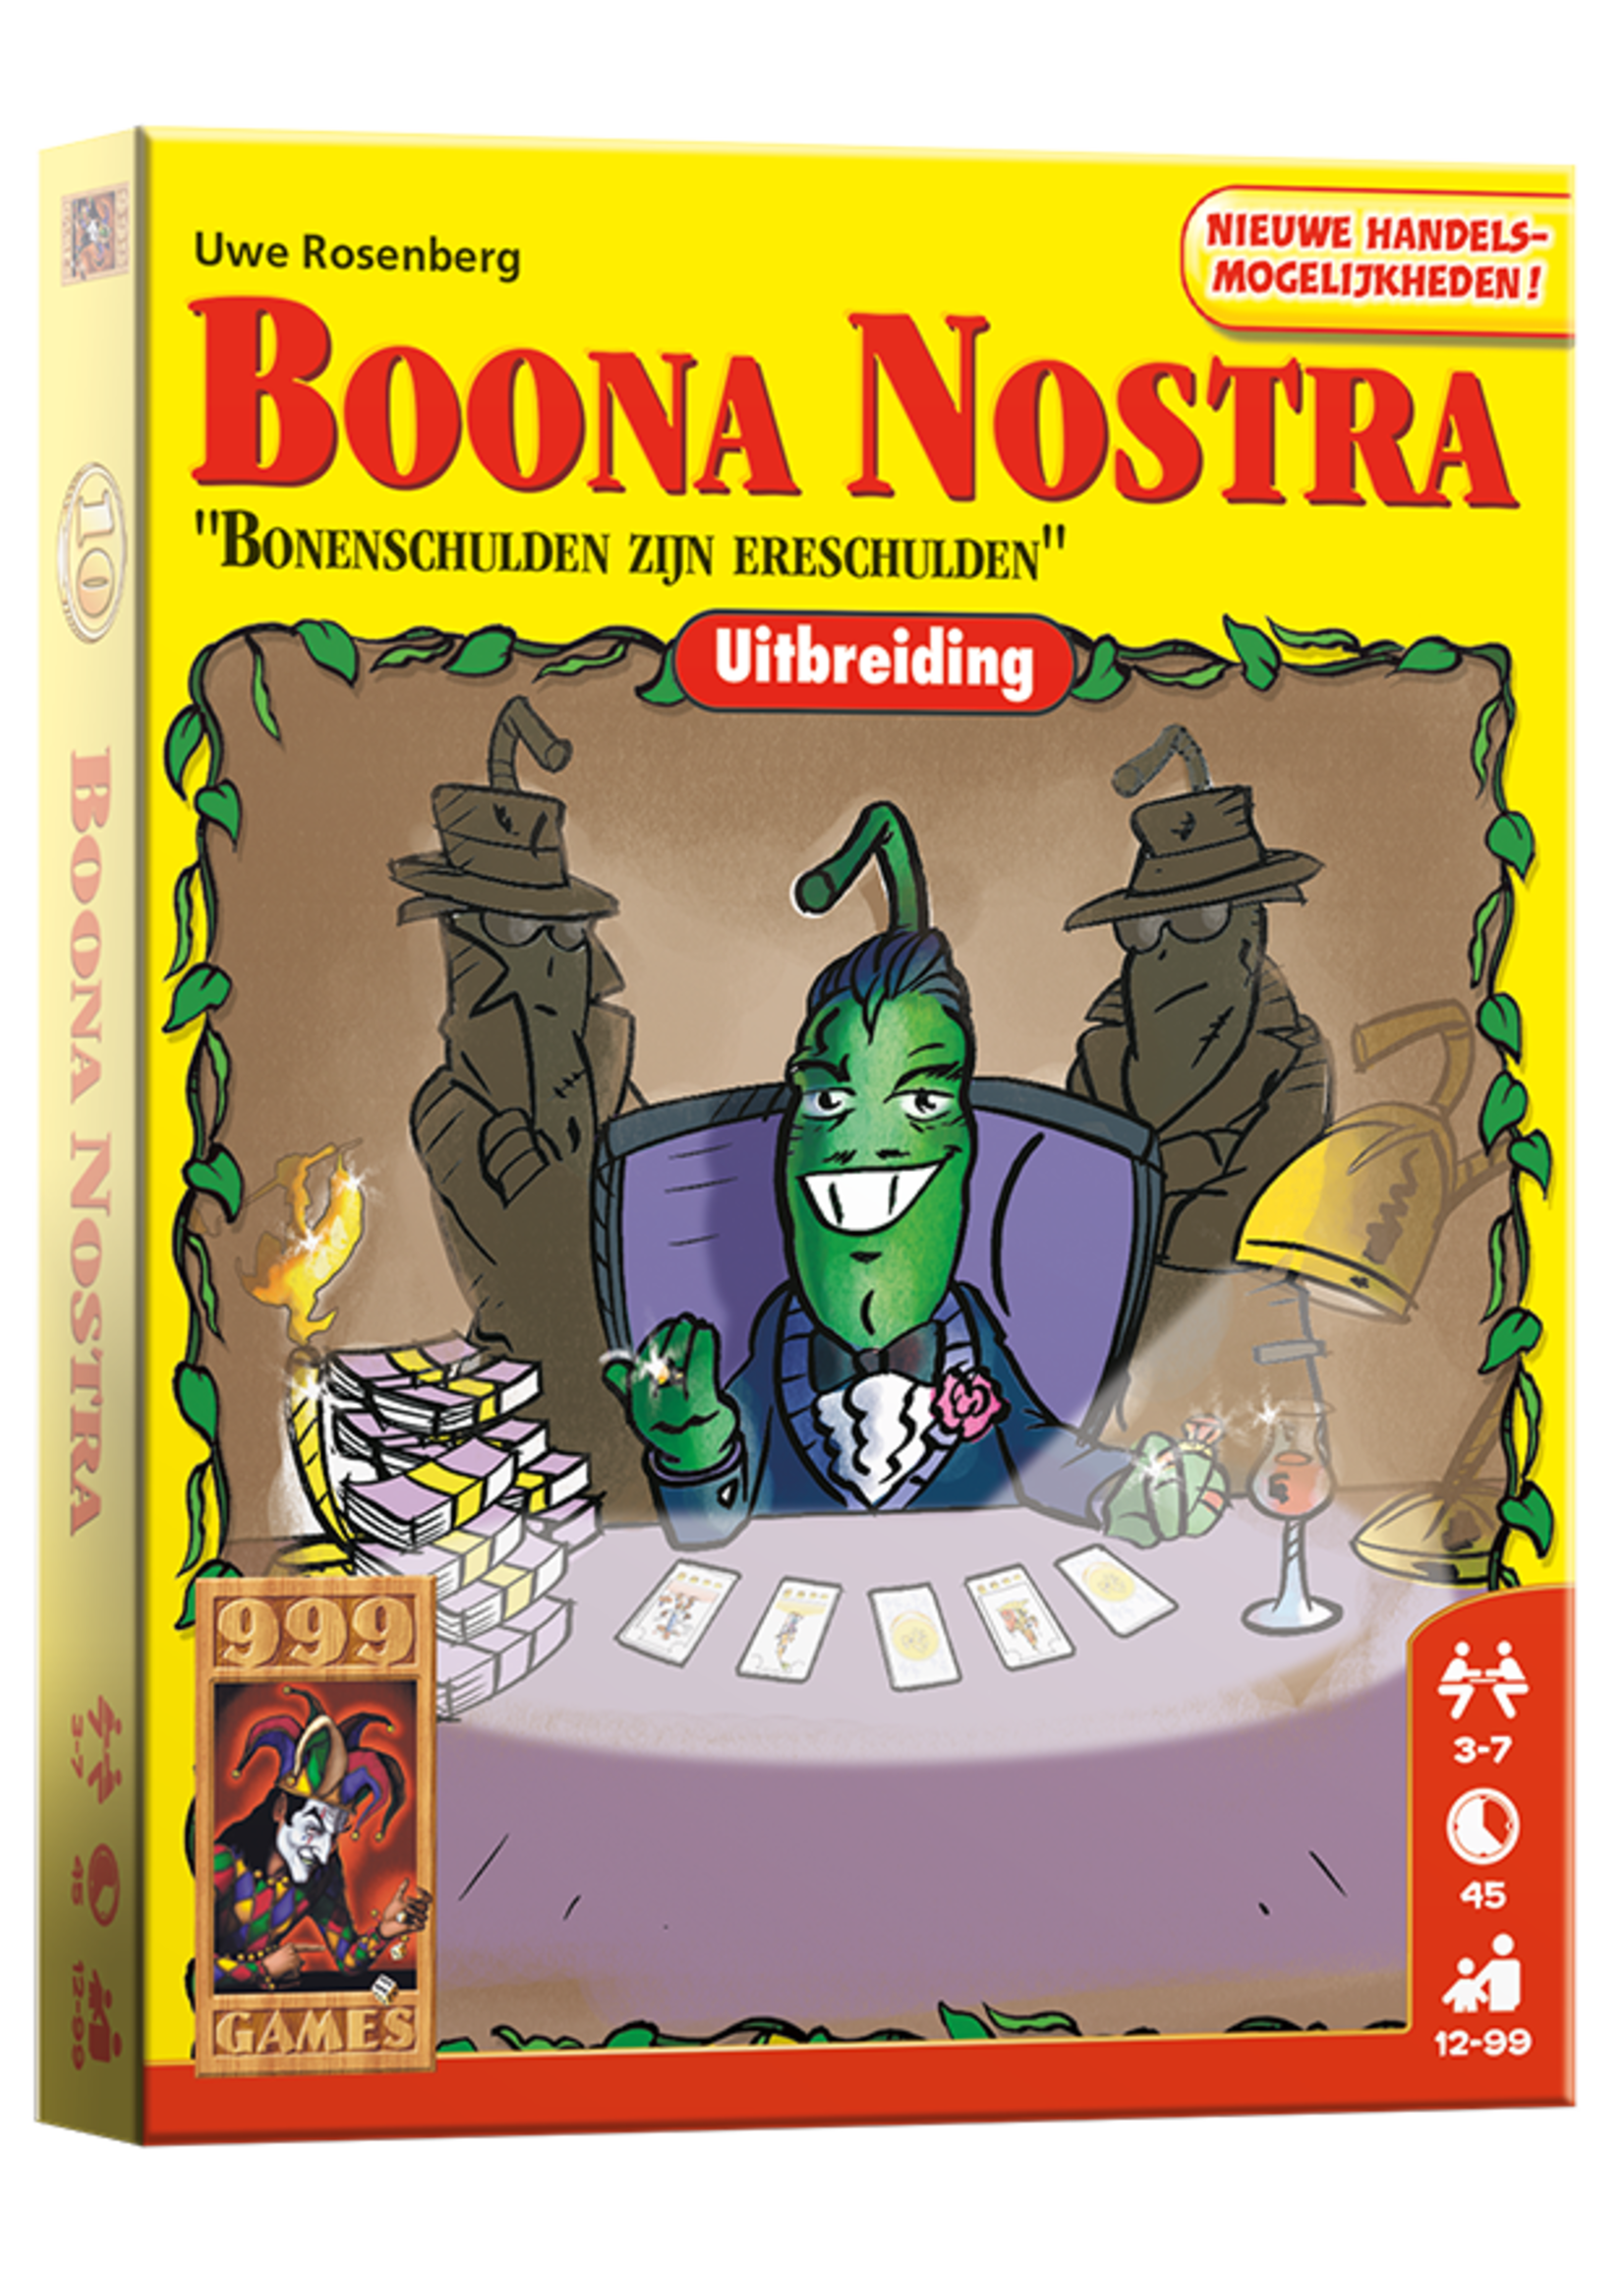 999 Games SPEL Boonanza: Boona Nostra Uitbreiding